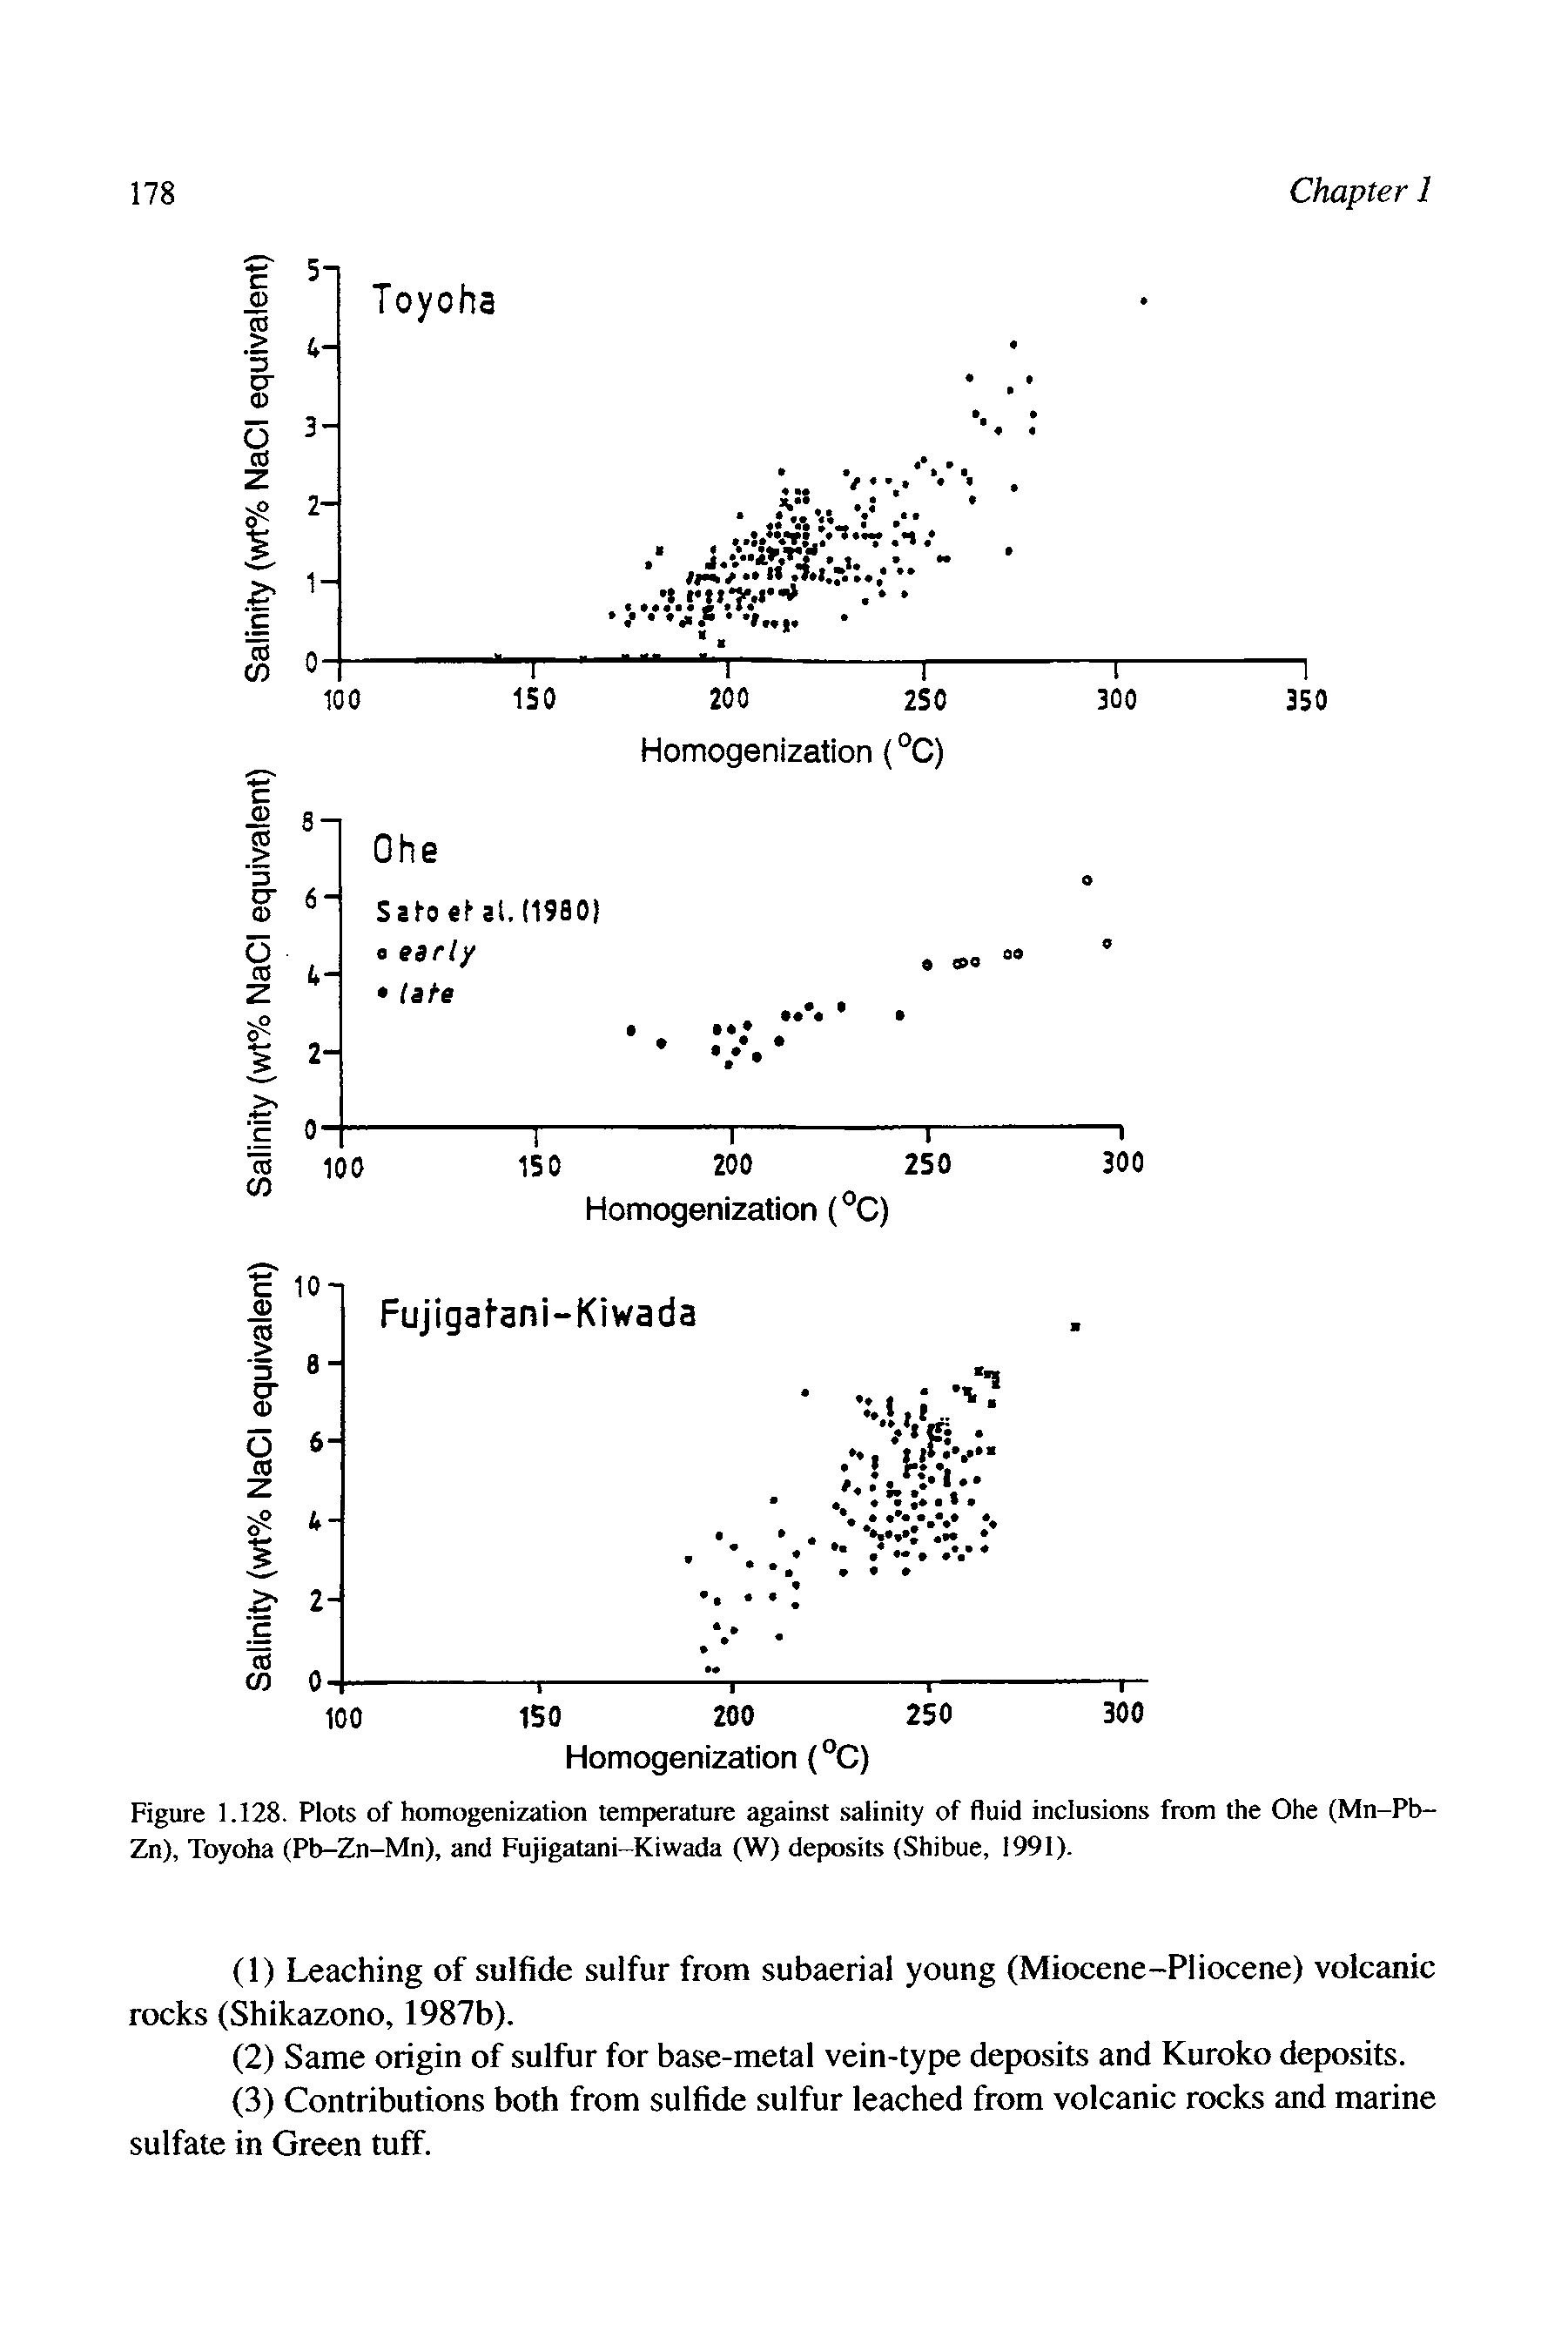 Figure 1.128. Plots of homogenization temperature against salinity of fluid inclusions from the Ohe (Mn-Pb-Zn), Toyoha (Pb-Zn-Mn), and Fujigatani-Kiwada (W) deposits (Shibue, 1991).